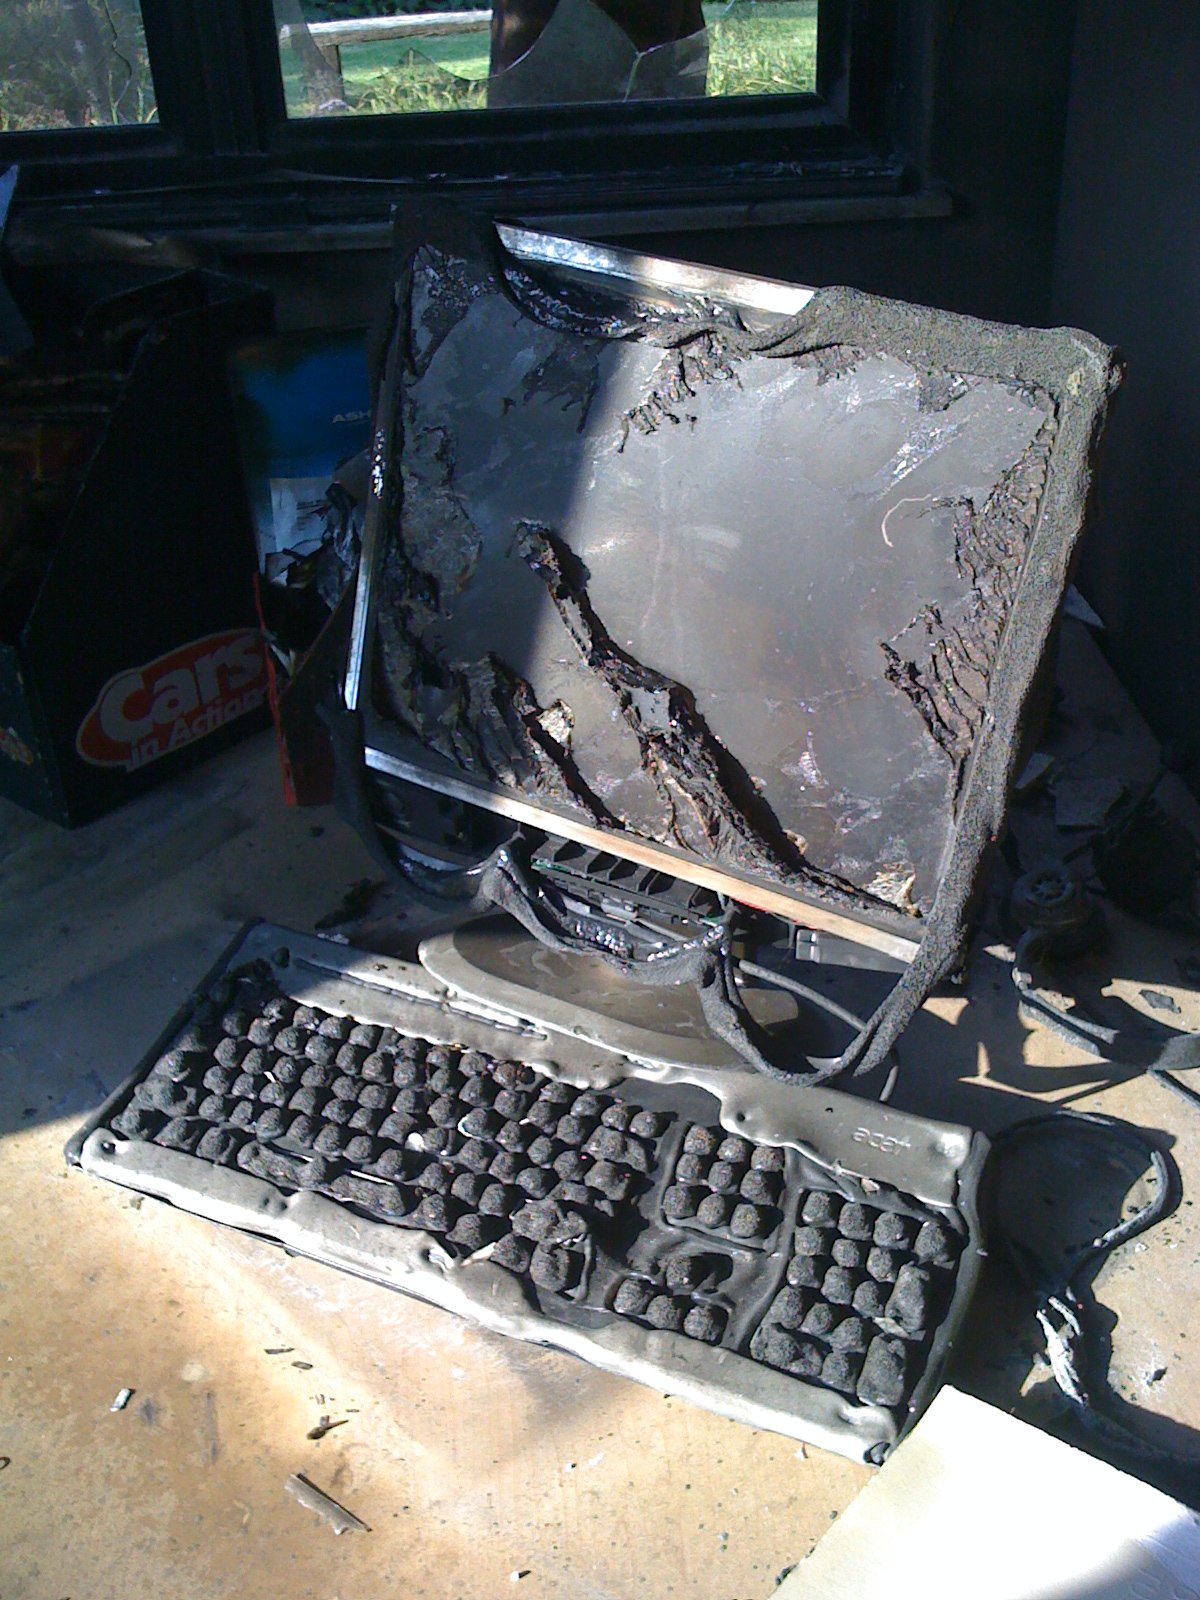 A desktop computer destroyed by fire